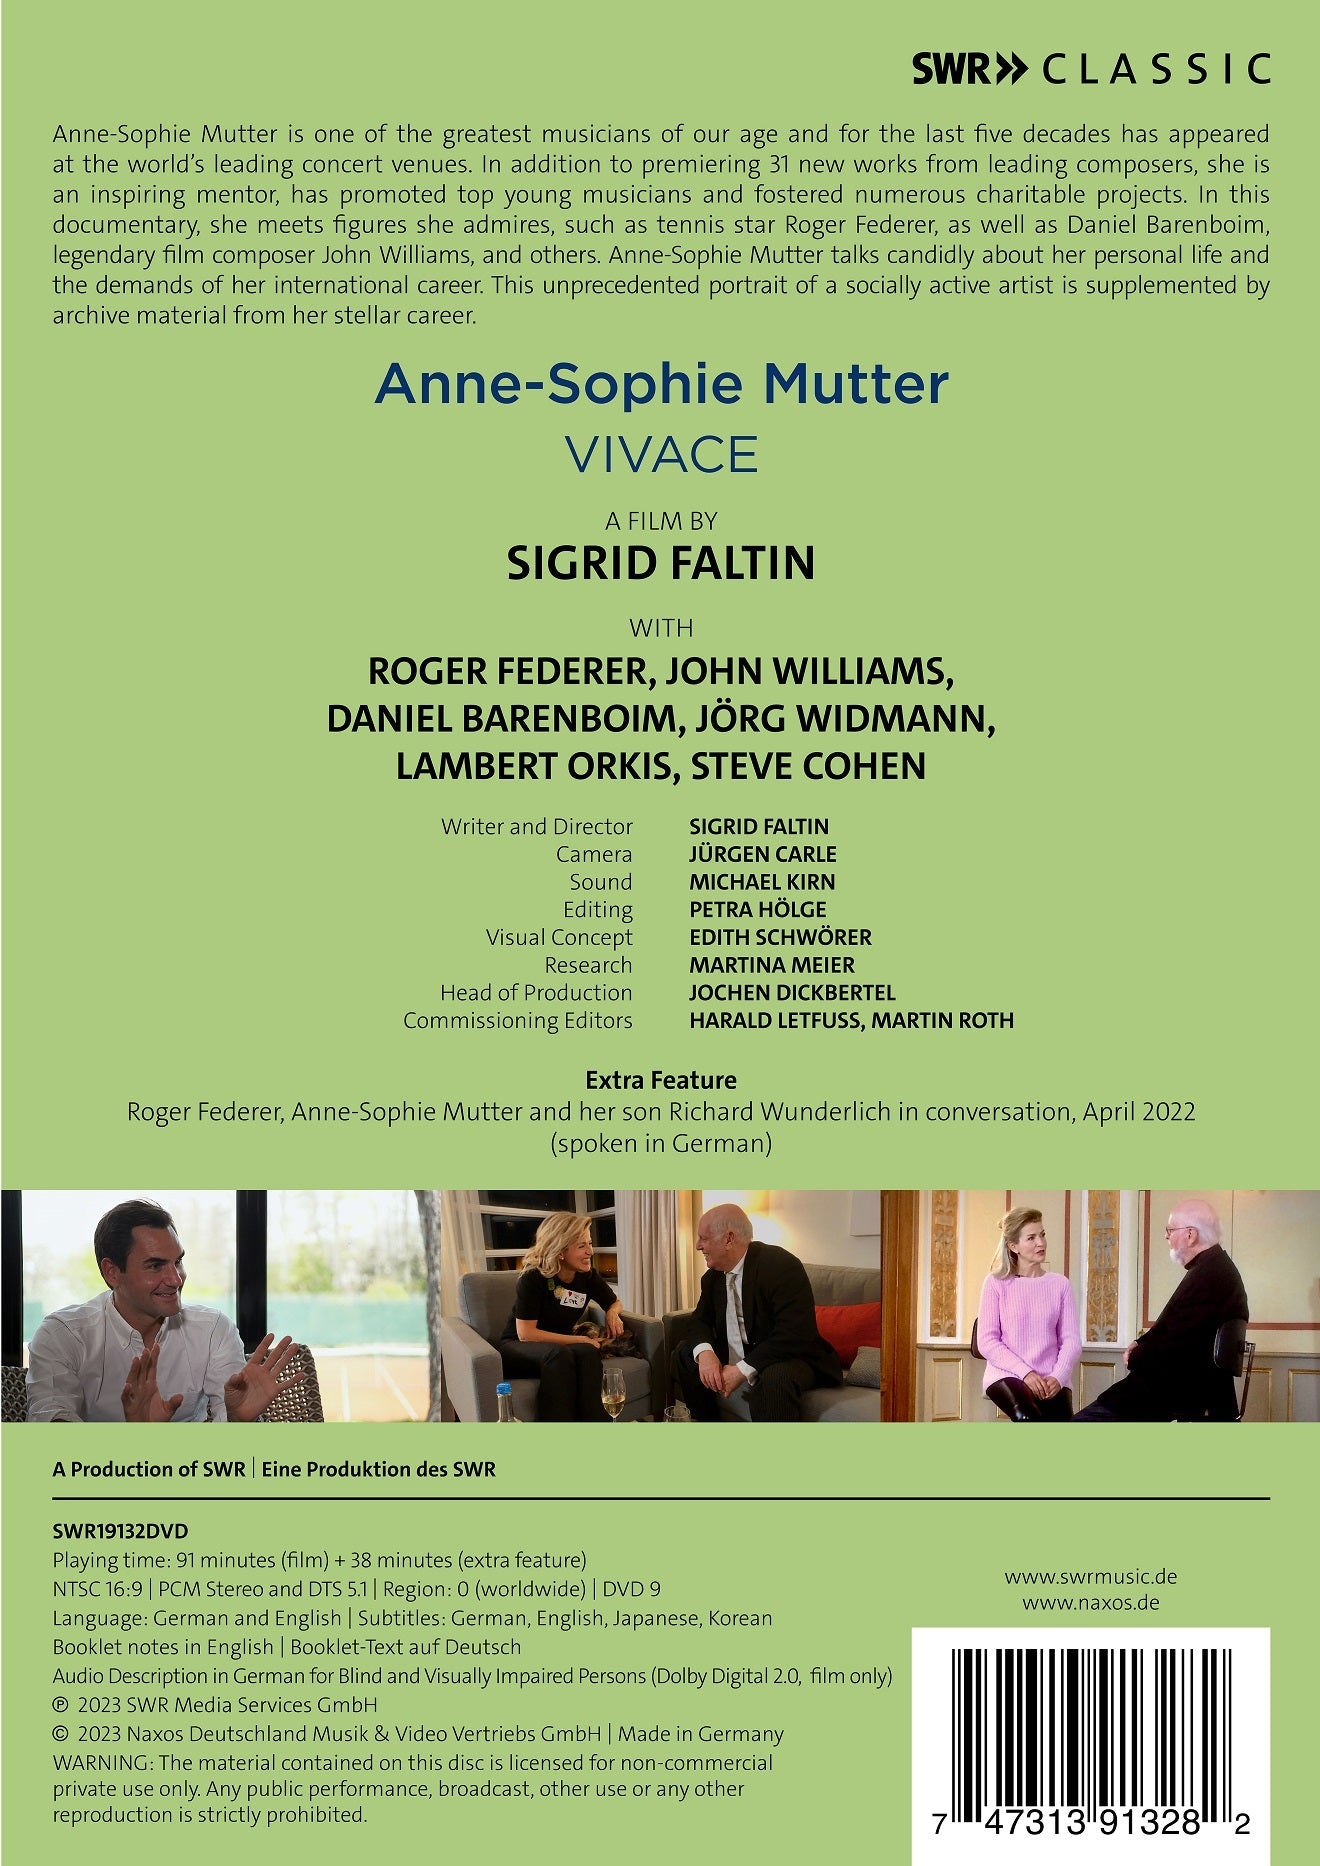 Anne-Sophie Mutter – Vivace